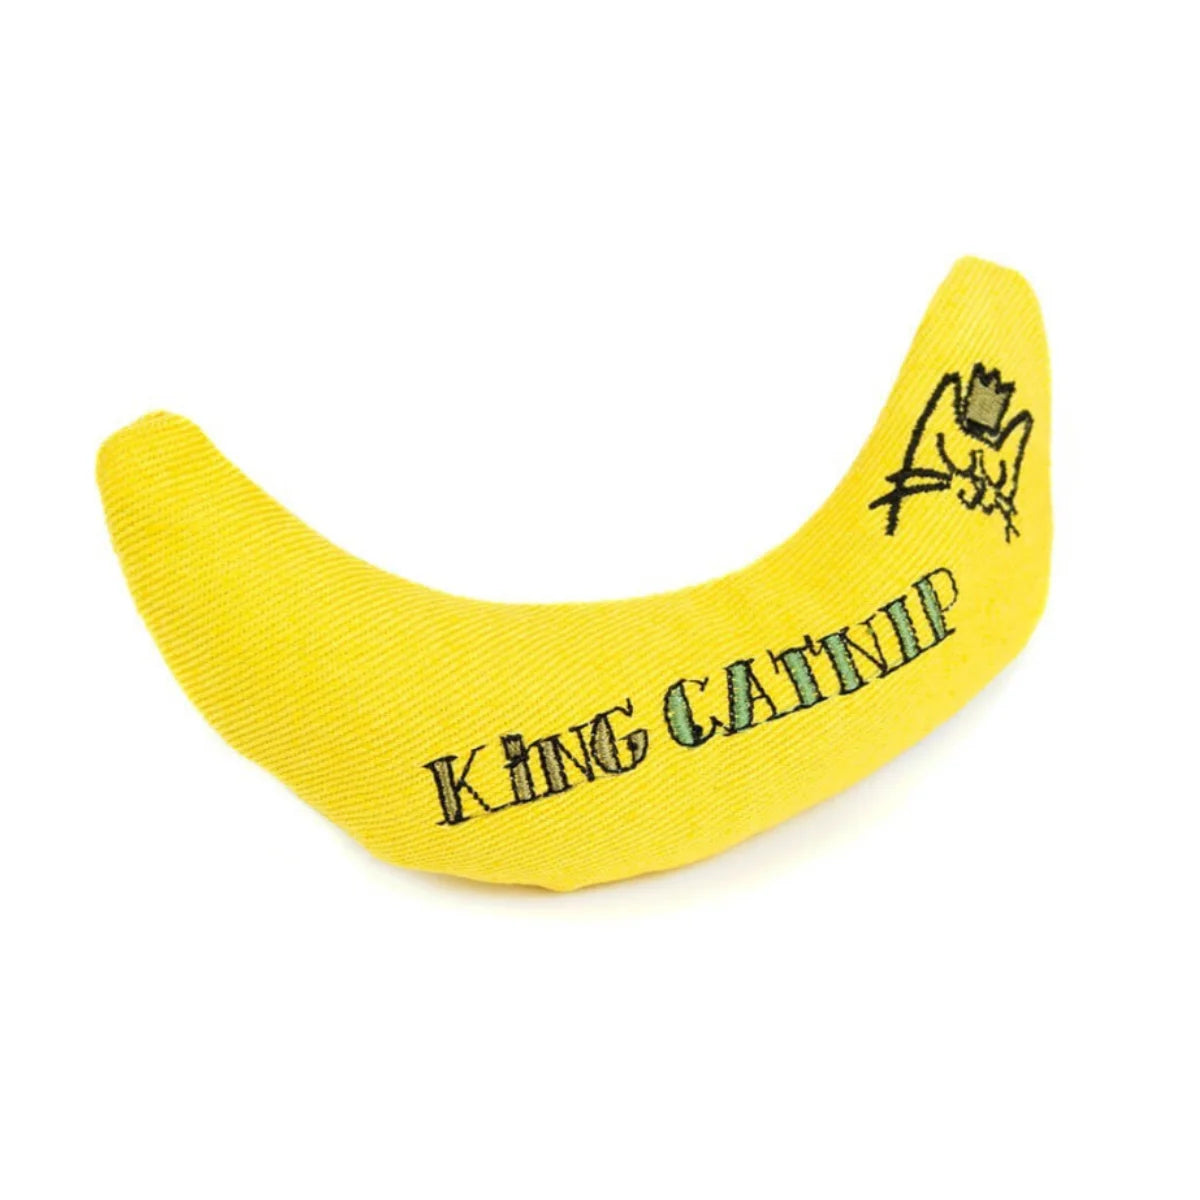 King Catnip - Banana Cat Toy